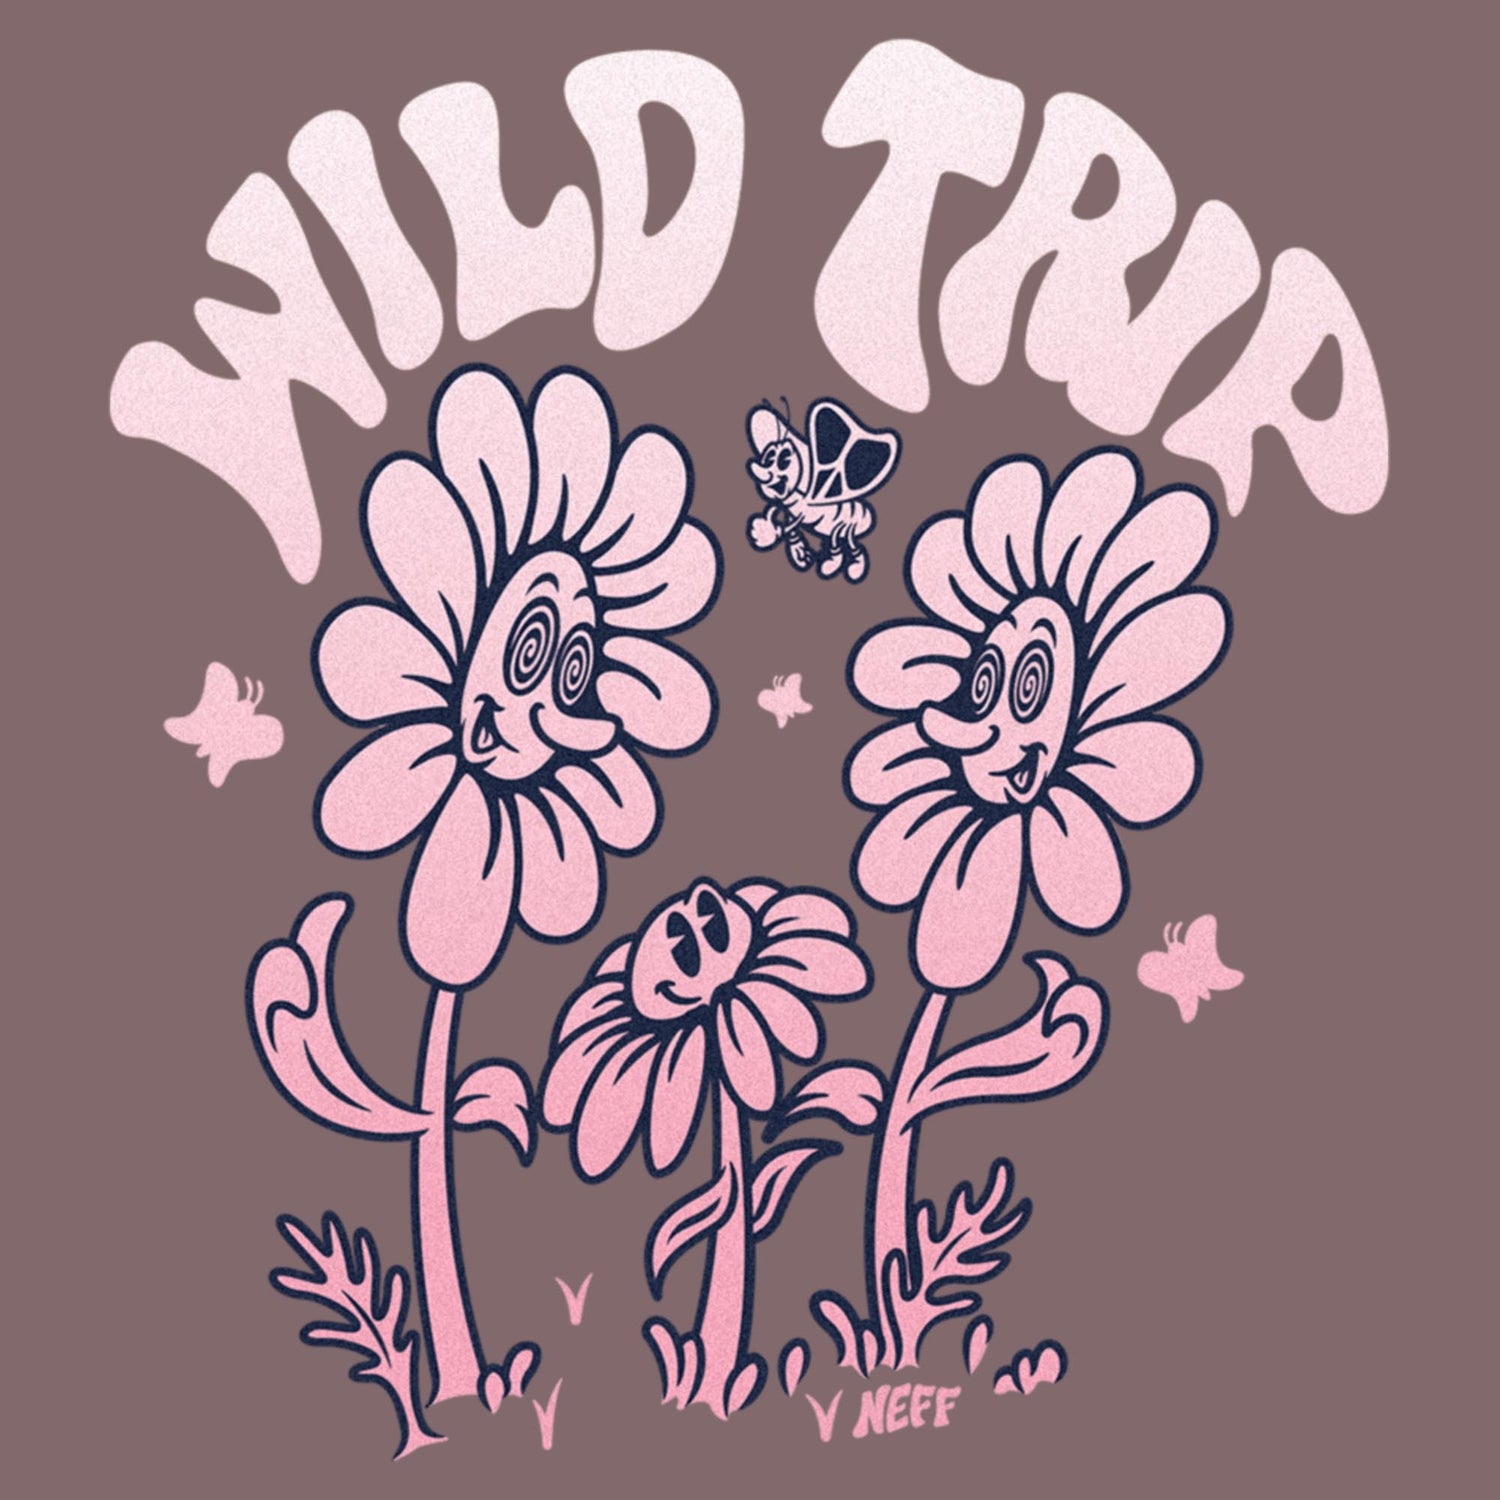 Men's NEFF Wild Trip T-Shirt